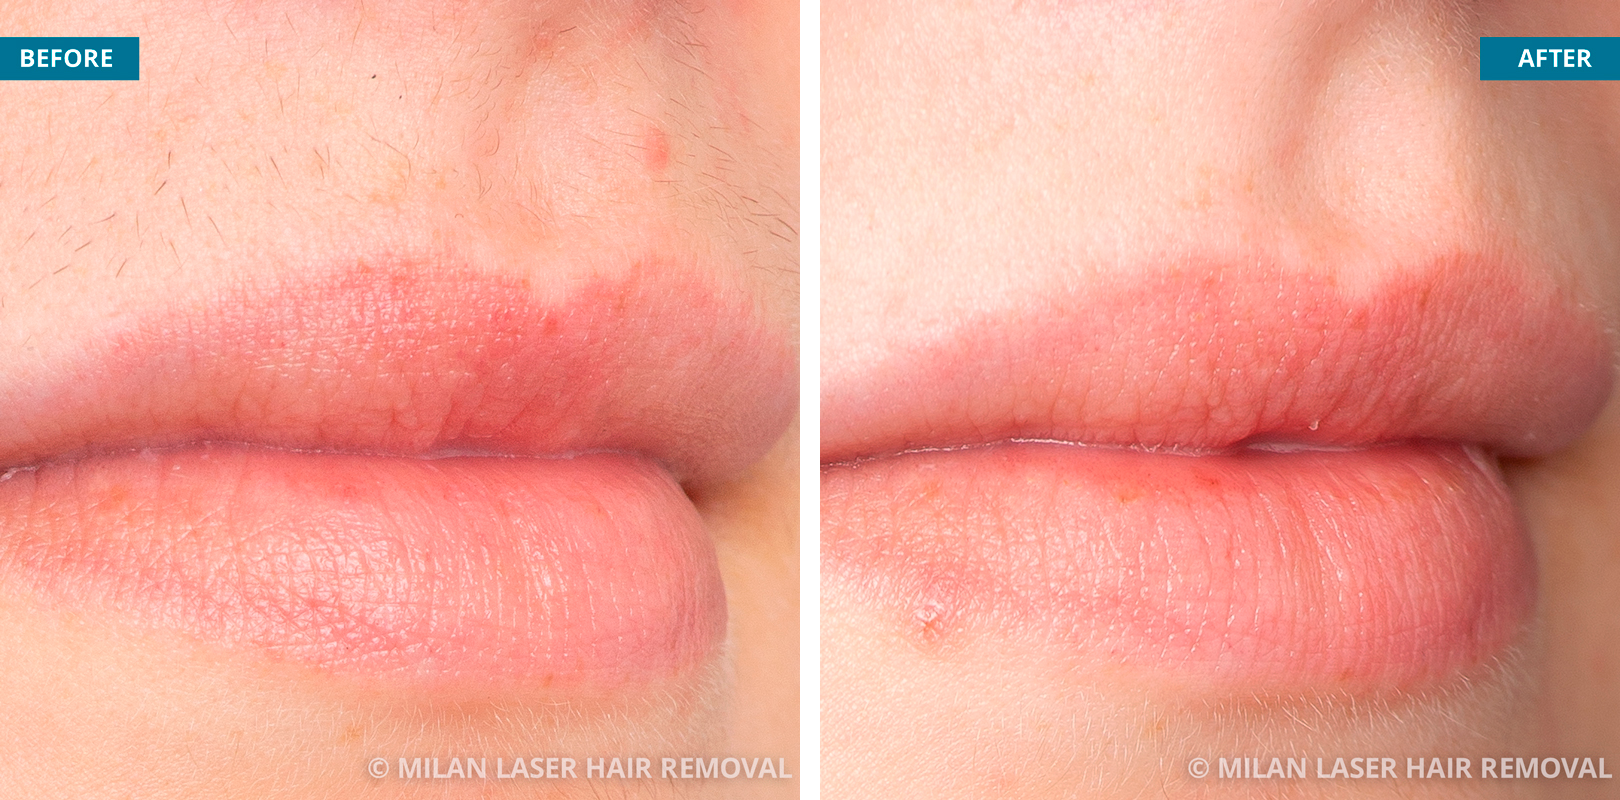 Upper lip area after sessions at Milan laser hair removal Source: Milan laser hair removal